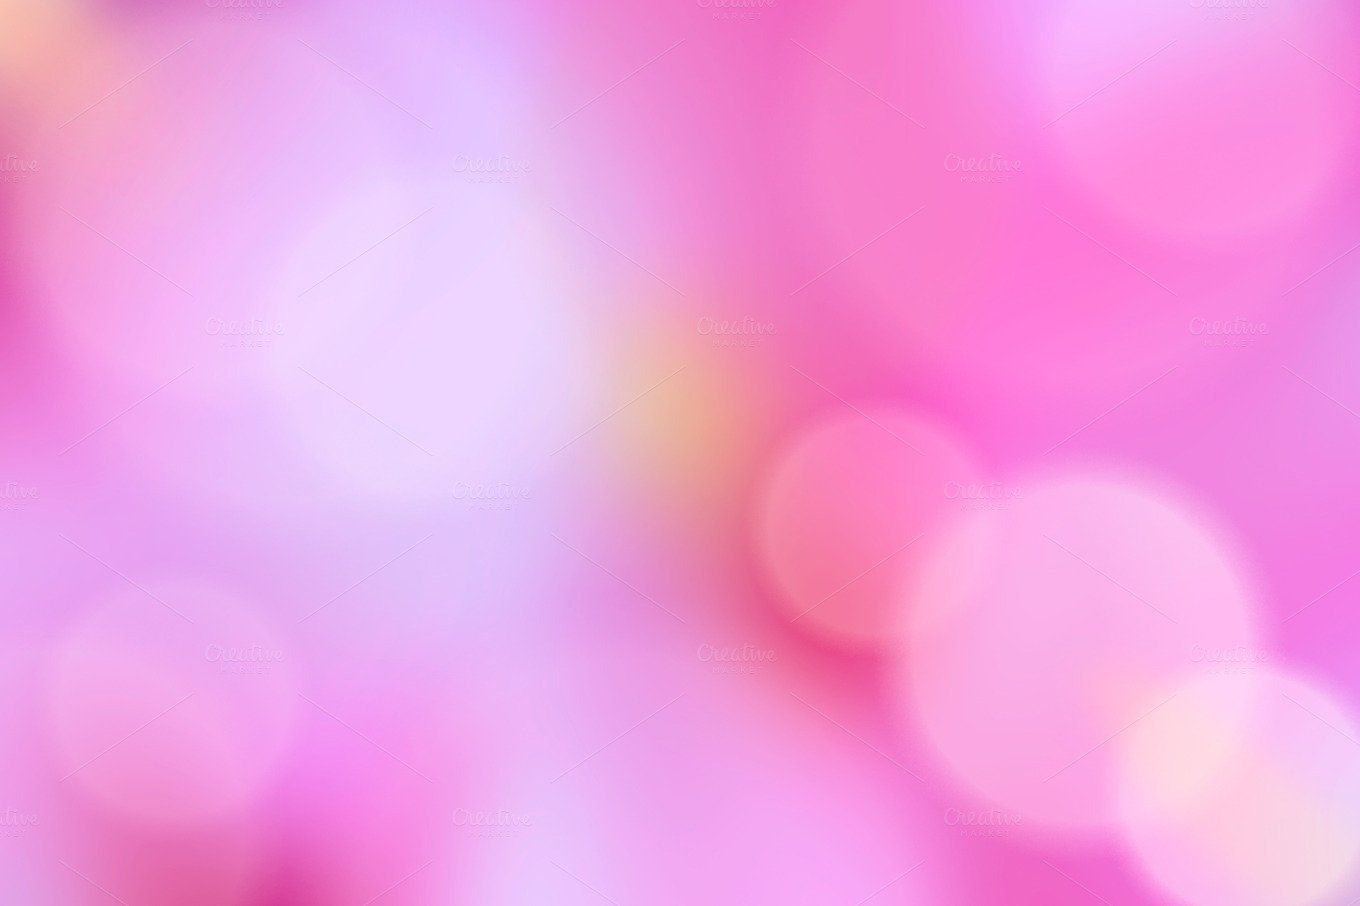 Free download Pink Bubble Gum Background Image amp Picture Becuo [1360x906] for your Desktop, Mobile & Tablet. Explore Pink Bubbles Wallpaper. Bubble Wallpaper for Computer, Wallpaper Bubbles